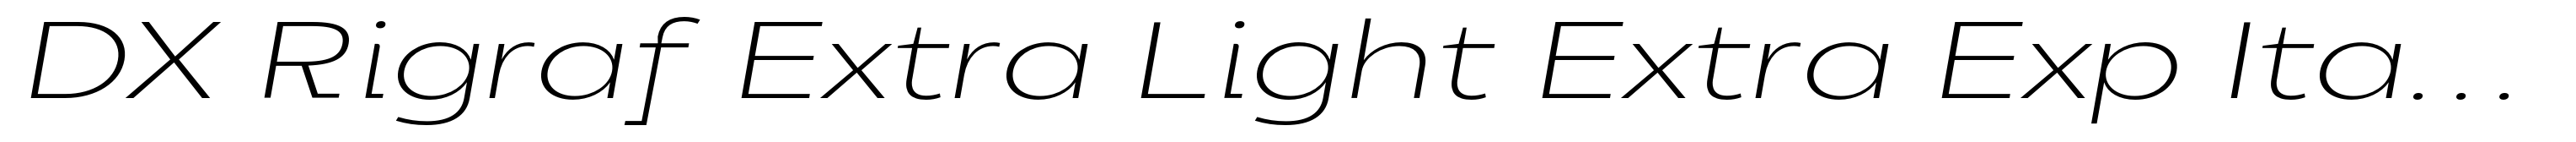 DX Rigraf Extra Light Extra Exp Italic